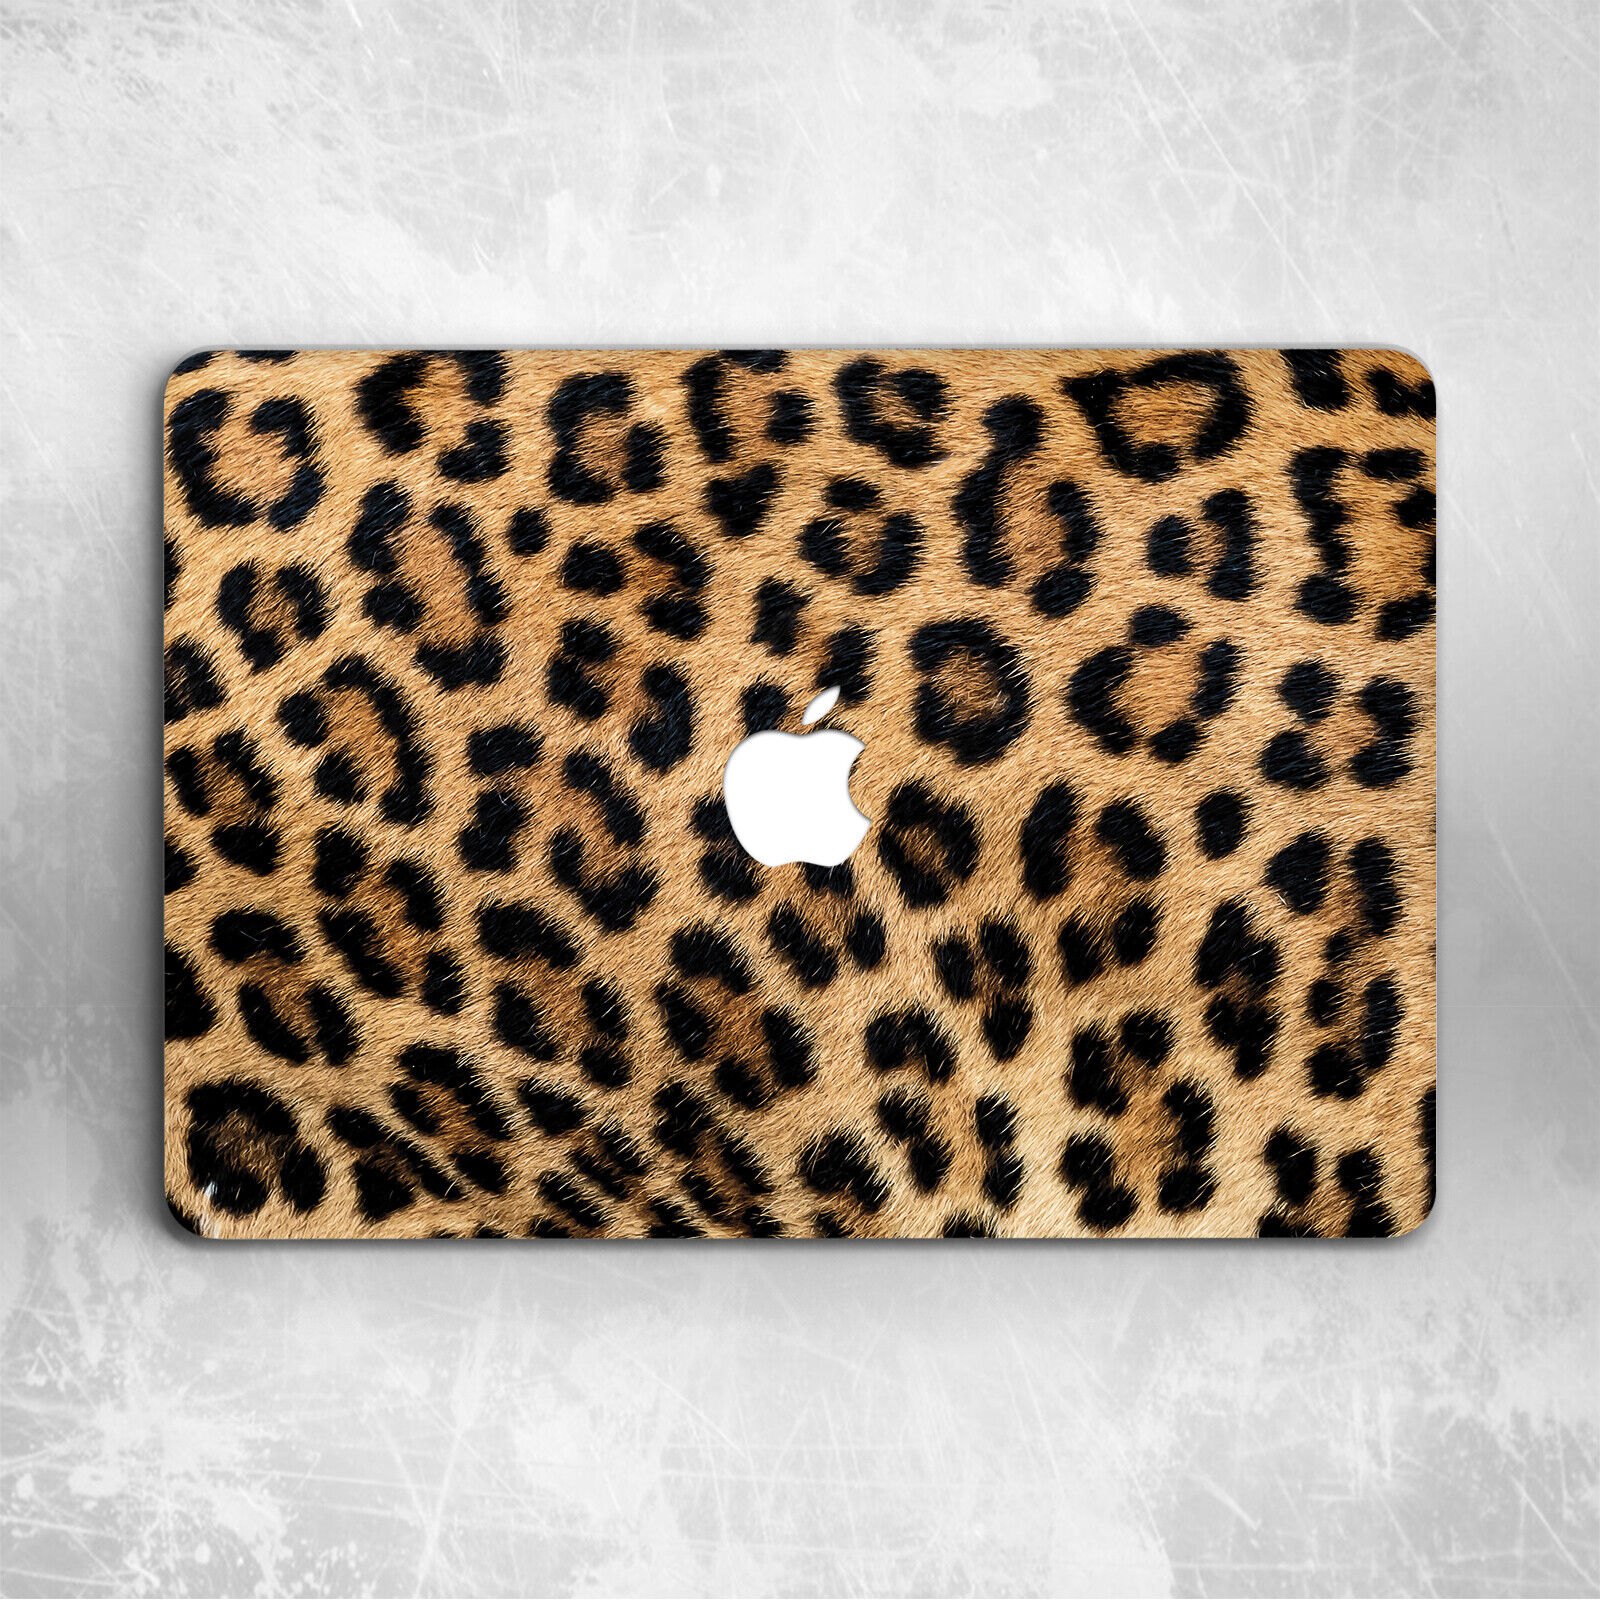 Cheetah Leopard Fur Print Hard Case Cover For Macbook Pro Retina Air 11 13 15 16